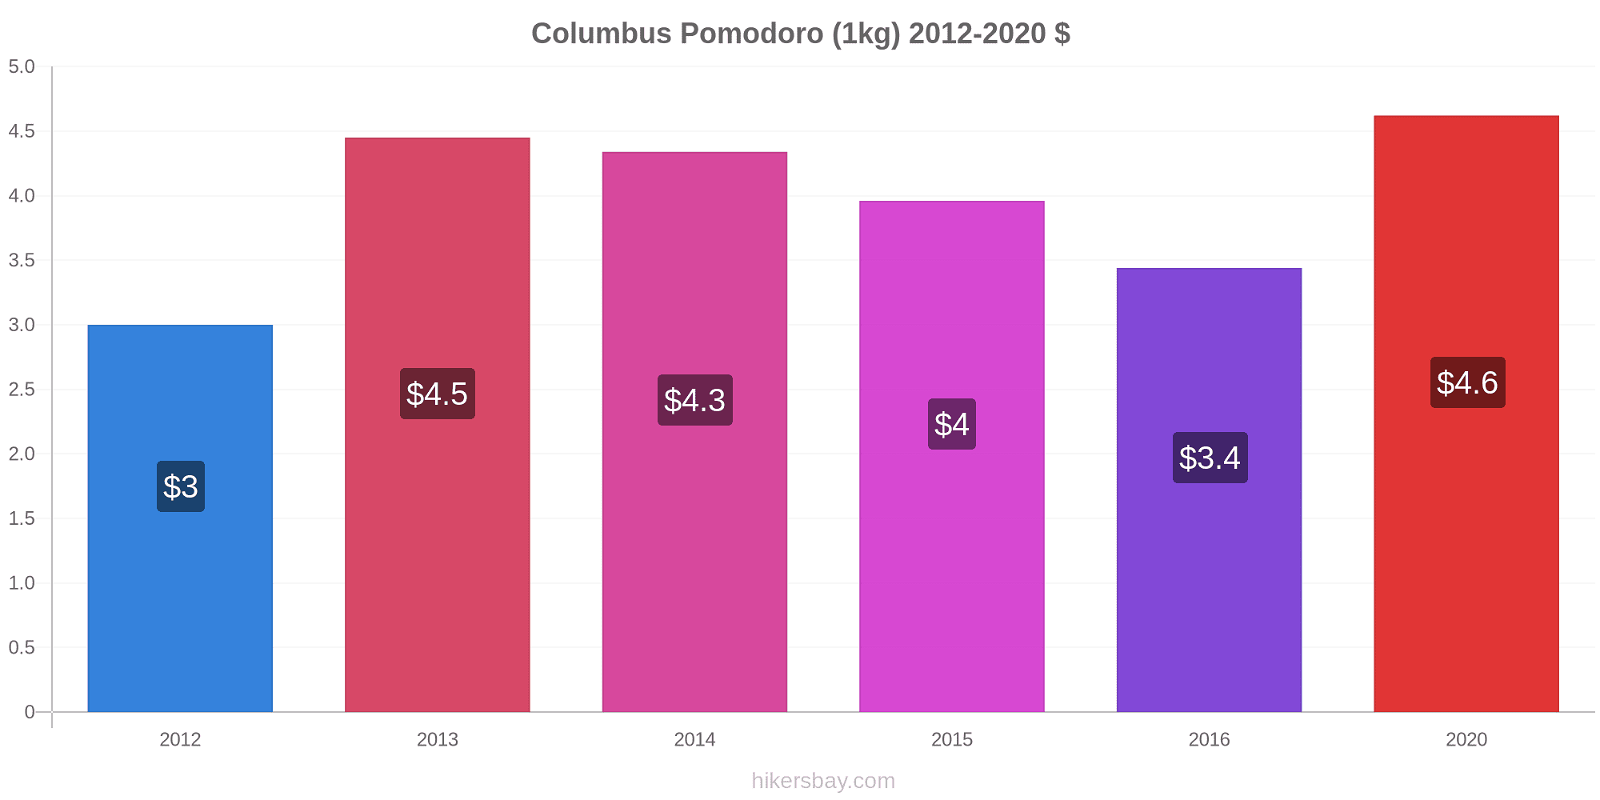 Columbus variazioni di prezzo Pomodoro (1kg) hikersbay.com